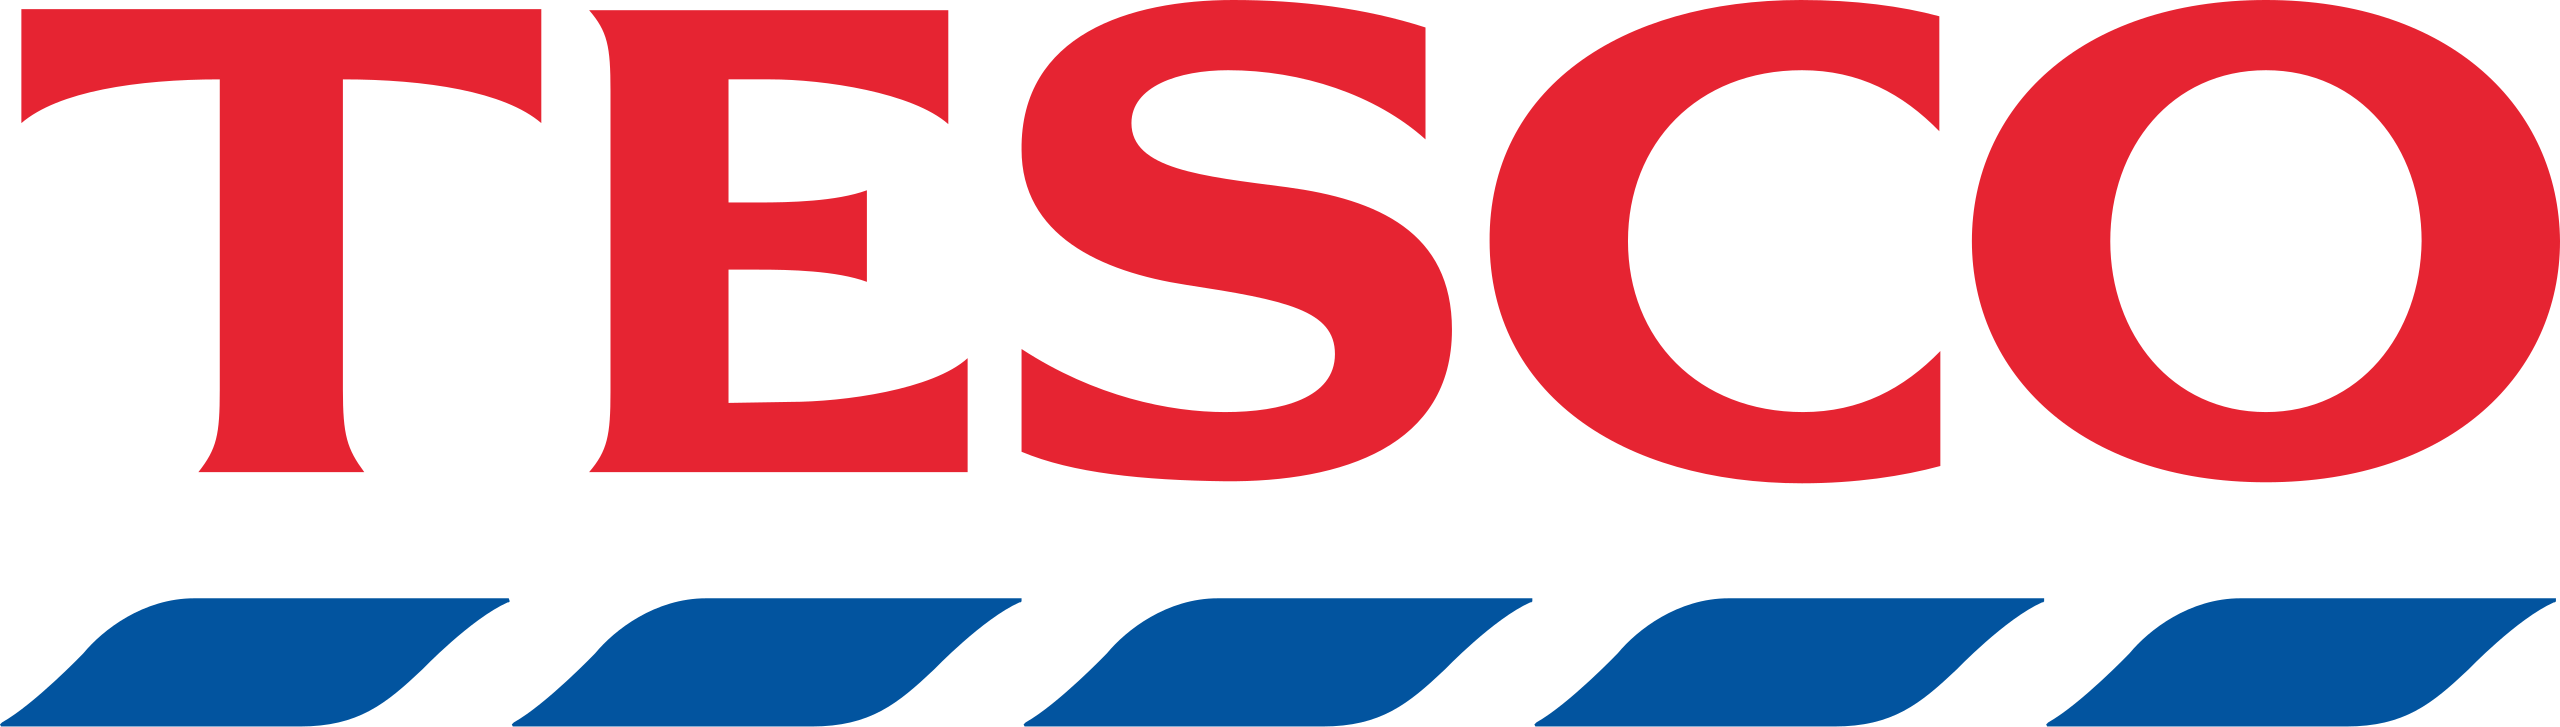 File:Tesco Logo.svg - Wikipedia